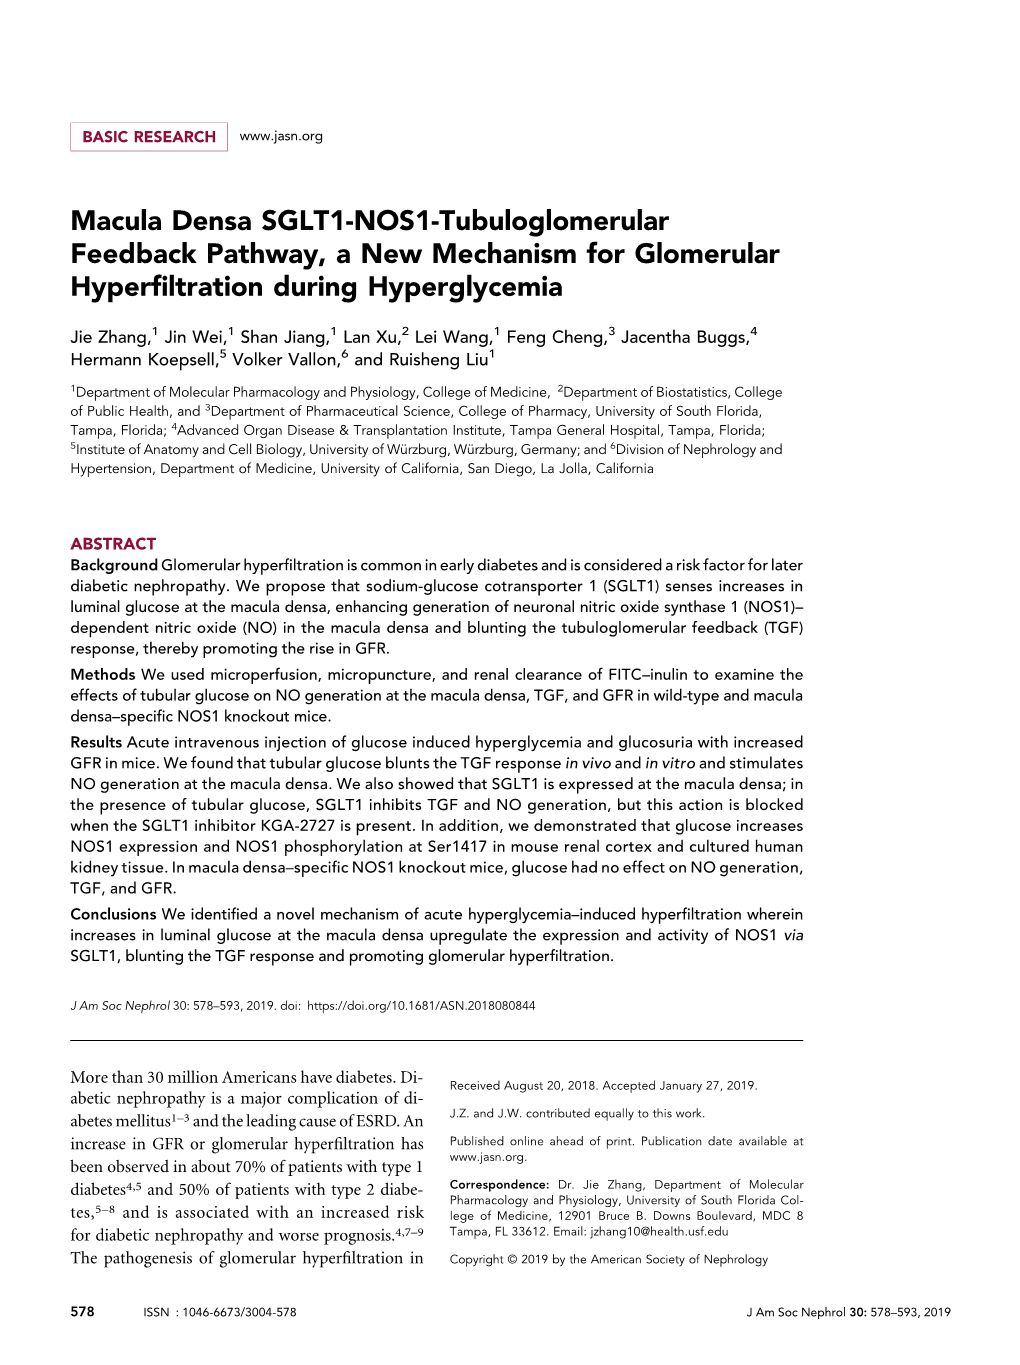 Macula Densa SGLT1-NOS1-Tubuloglomerular Feedback Pathway, a New Mechanism for Glomerular Hyperﬁltration During Hyperglycemia